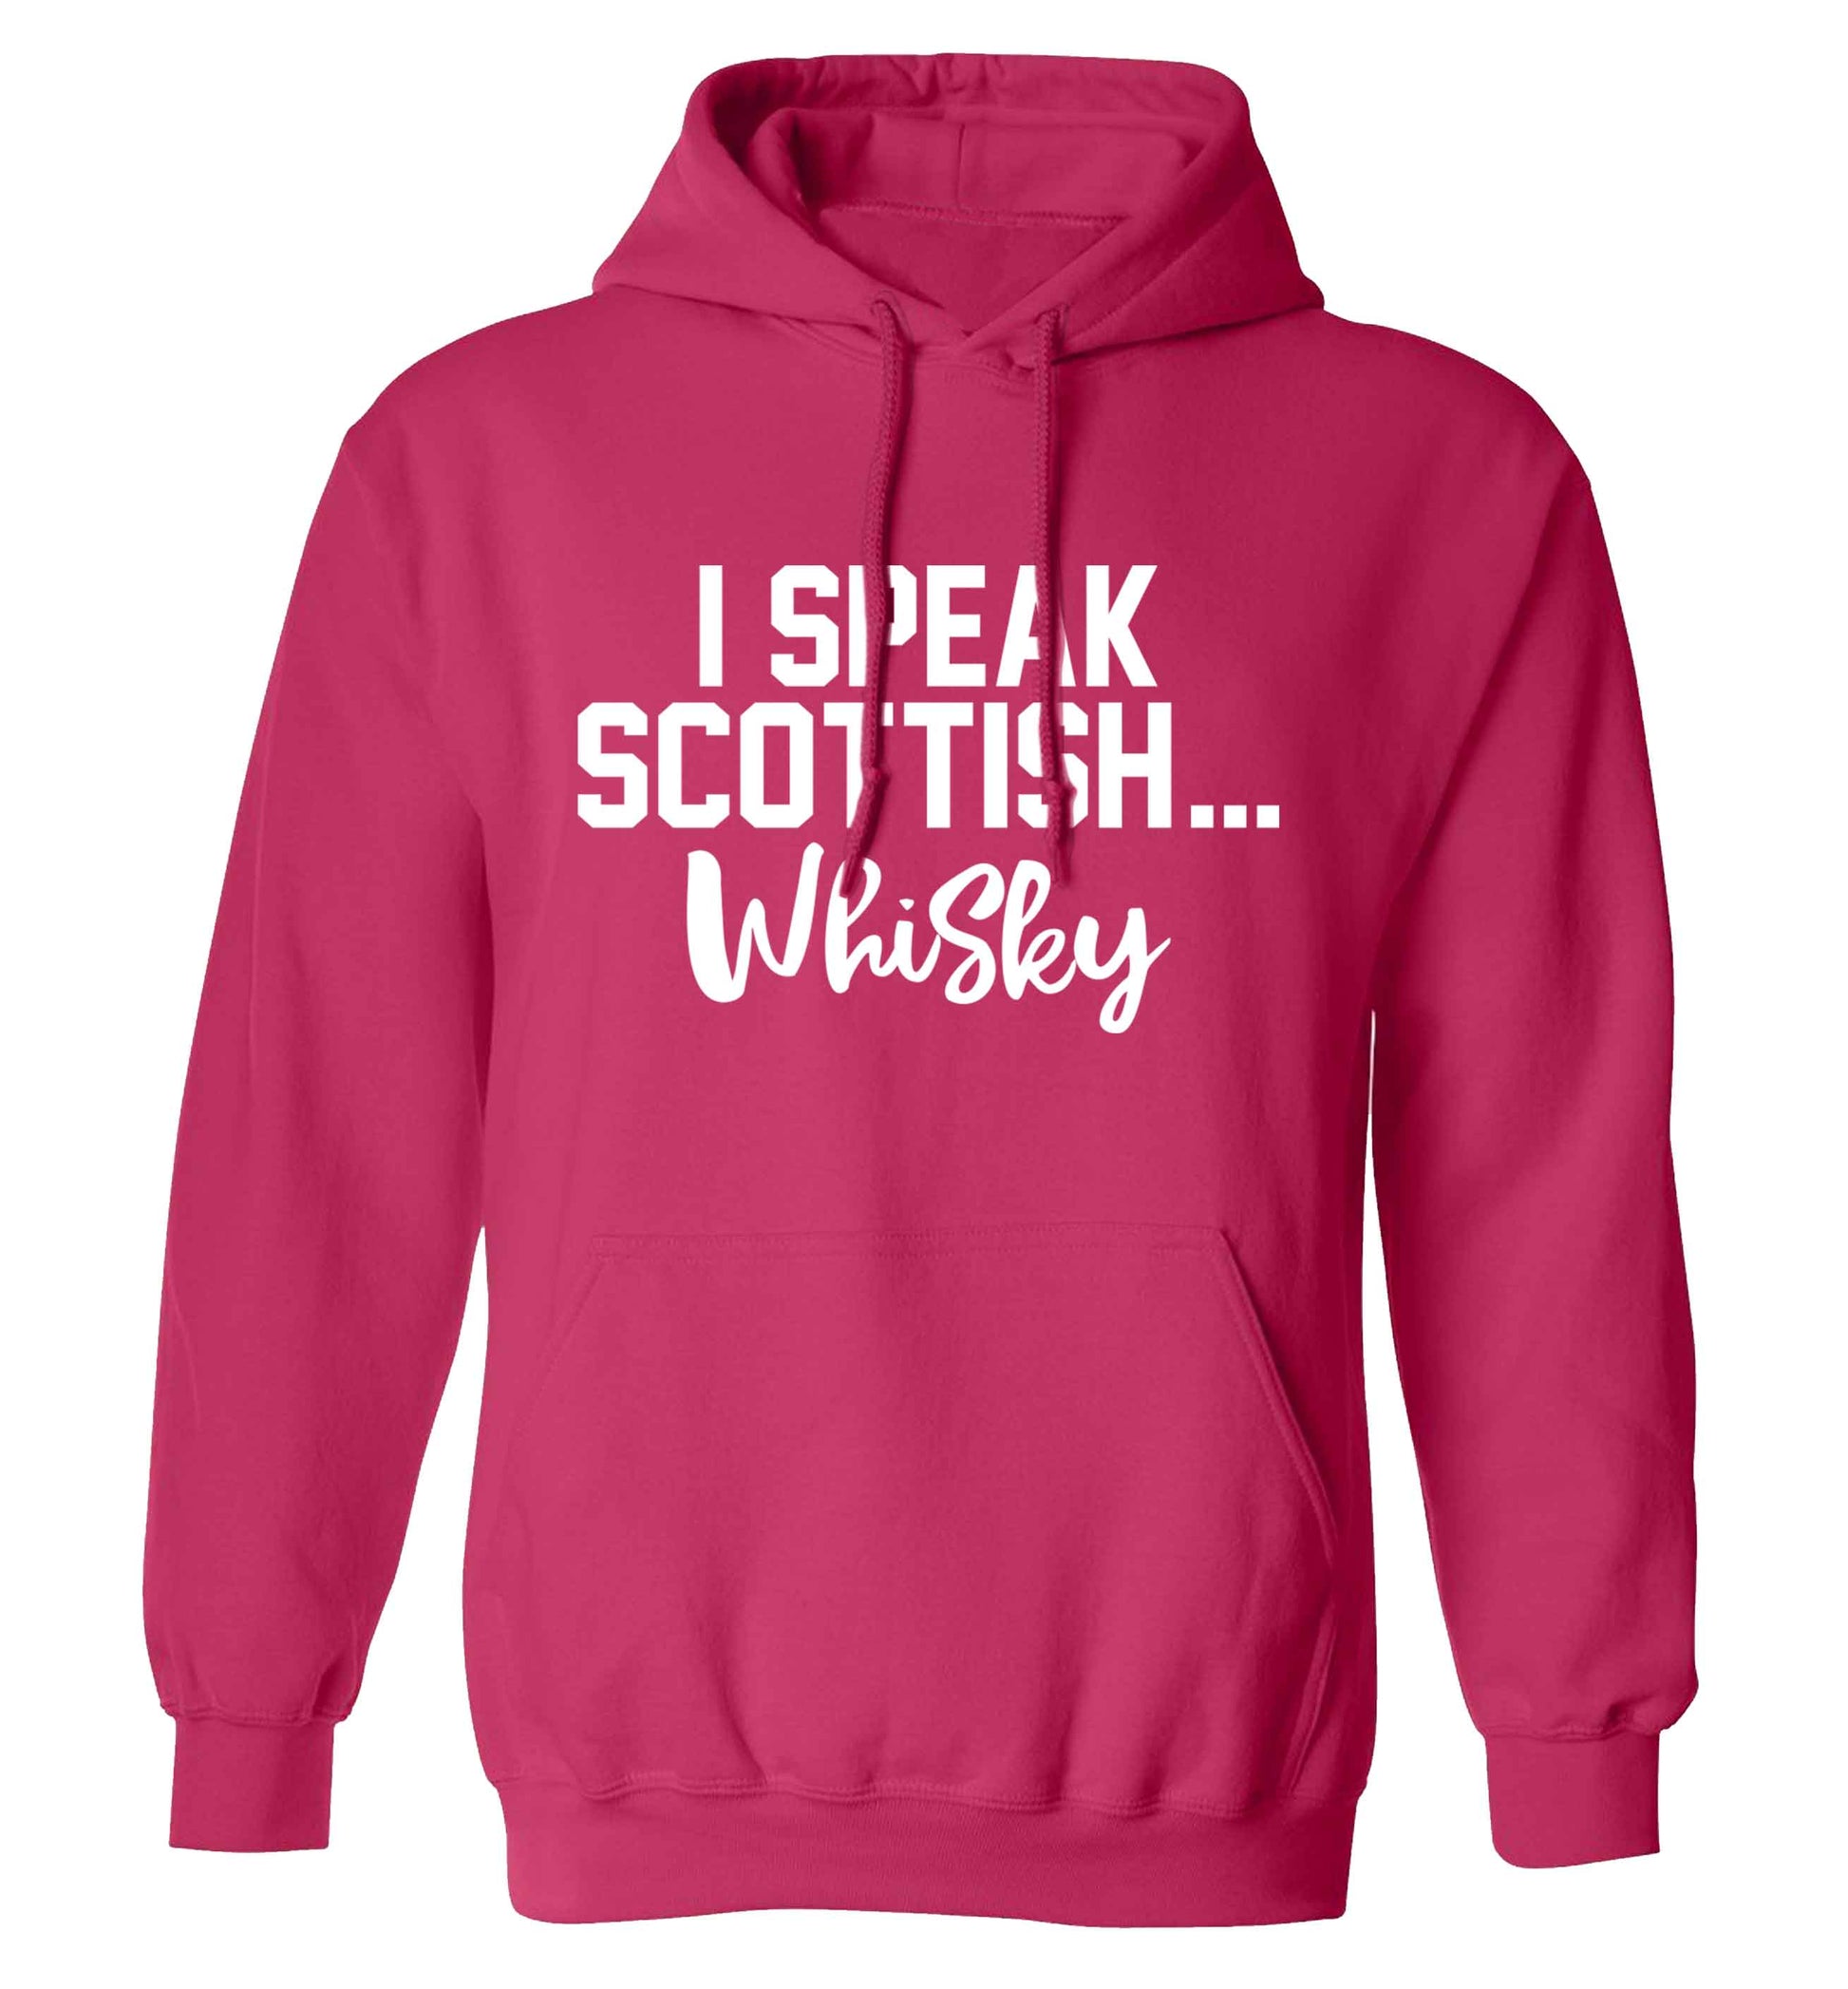 I speak scottish...whisky adults unisex pink hoodie 2XL